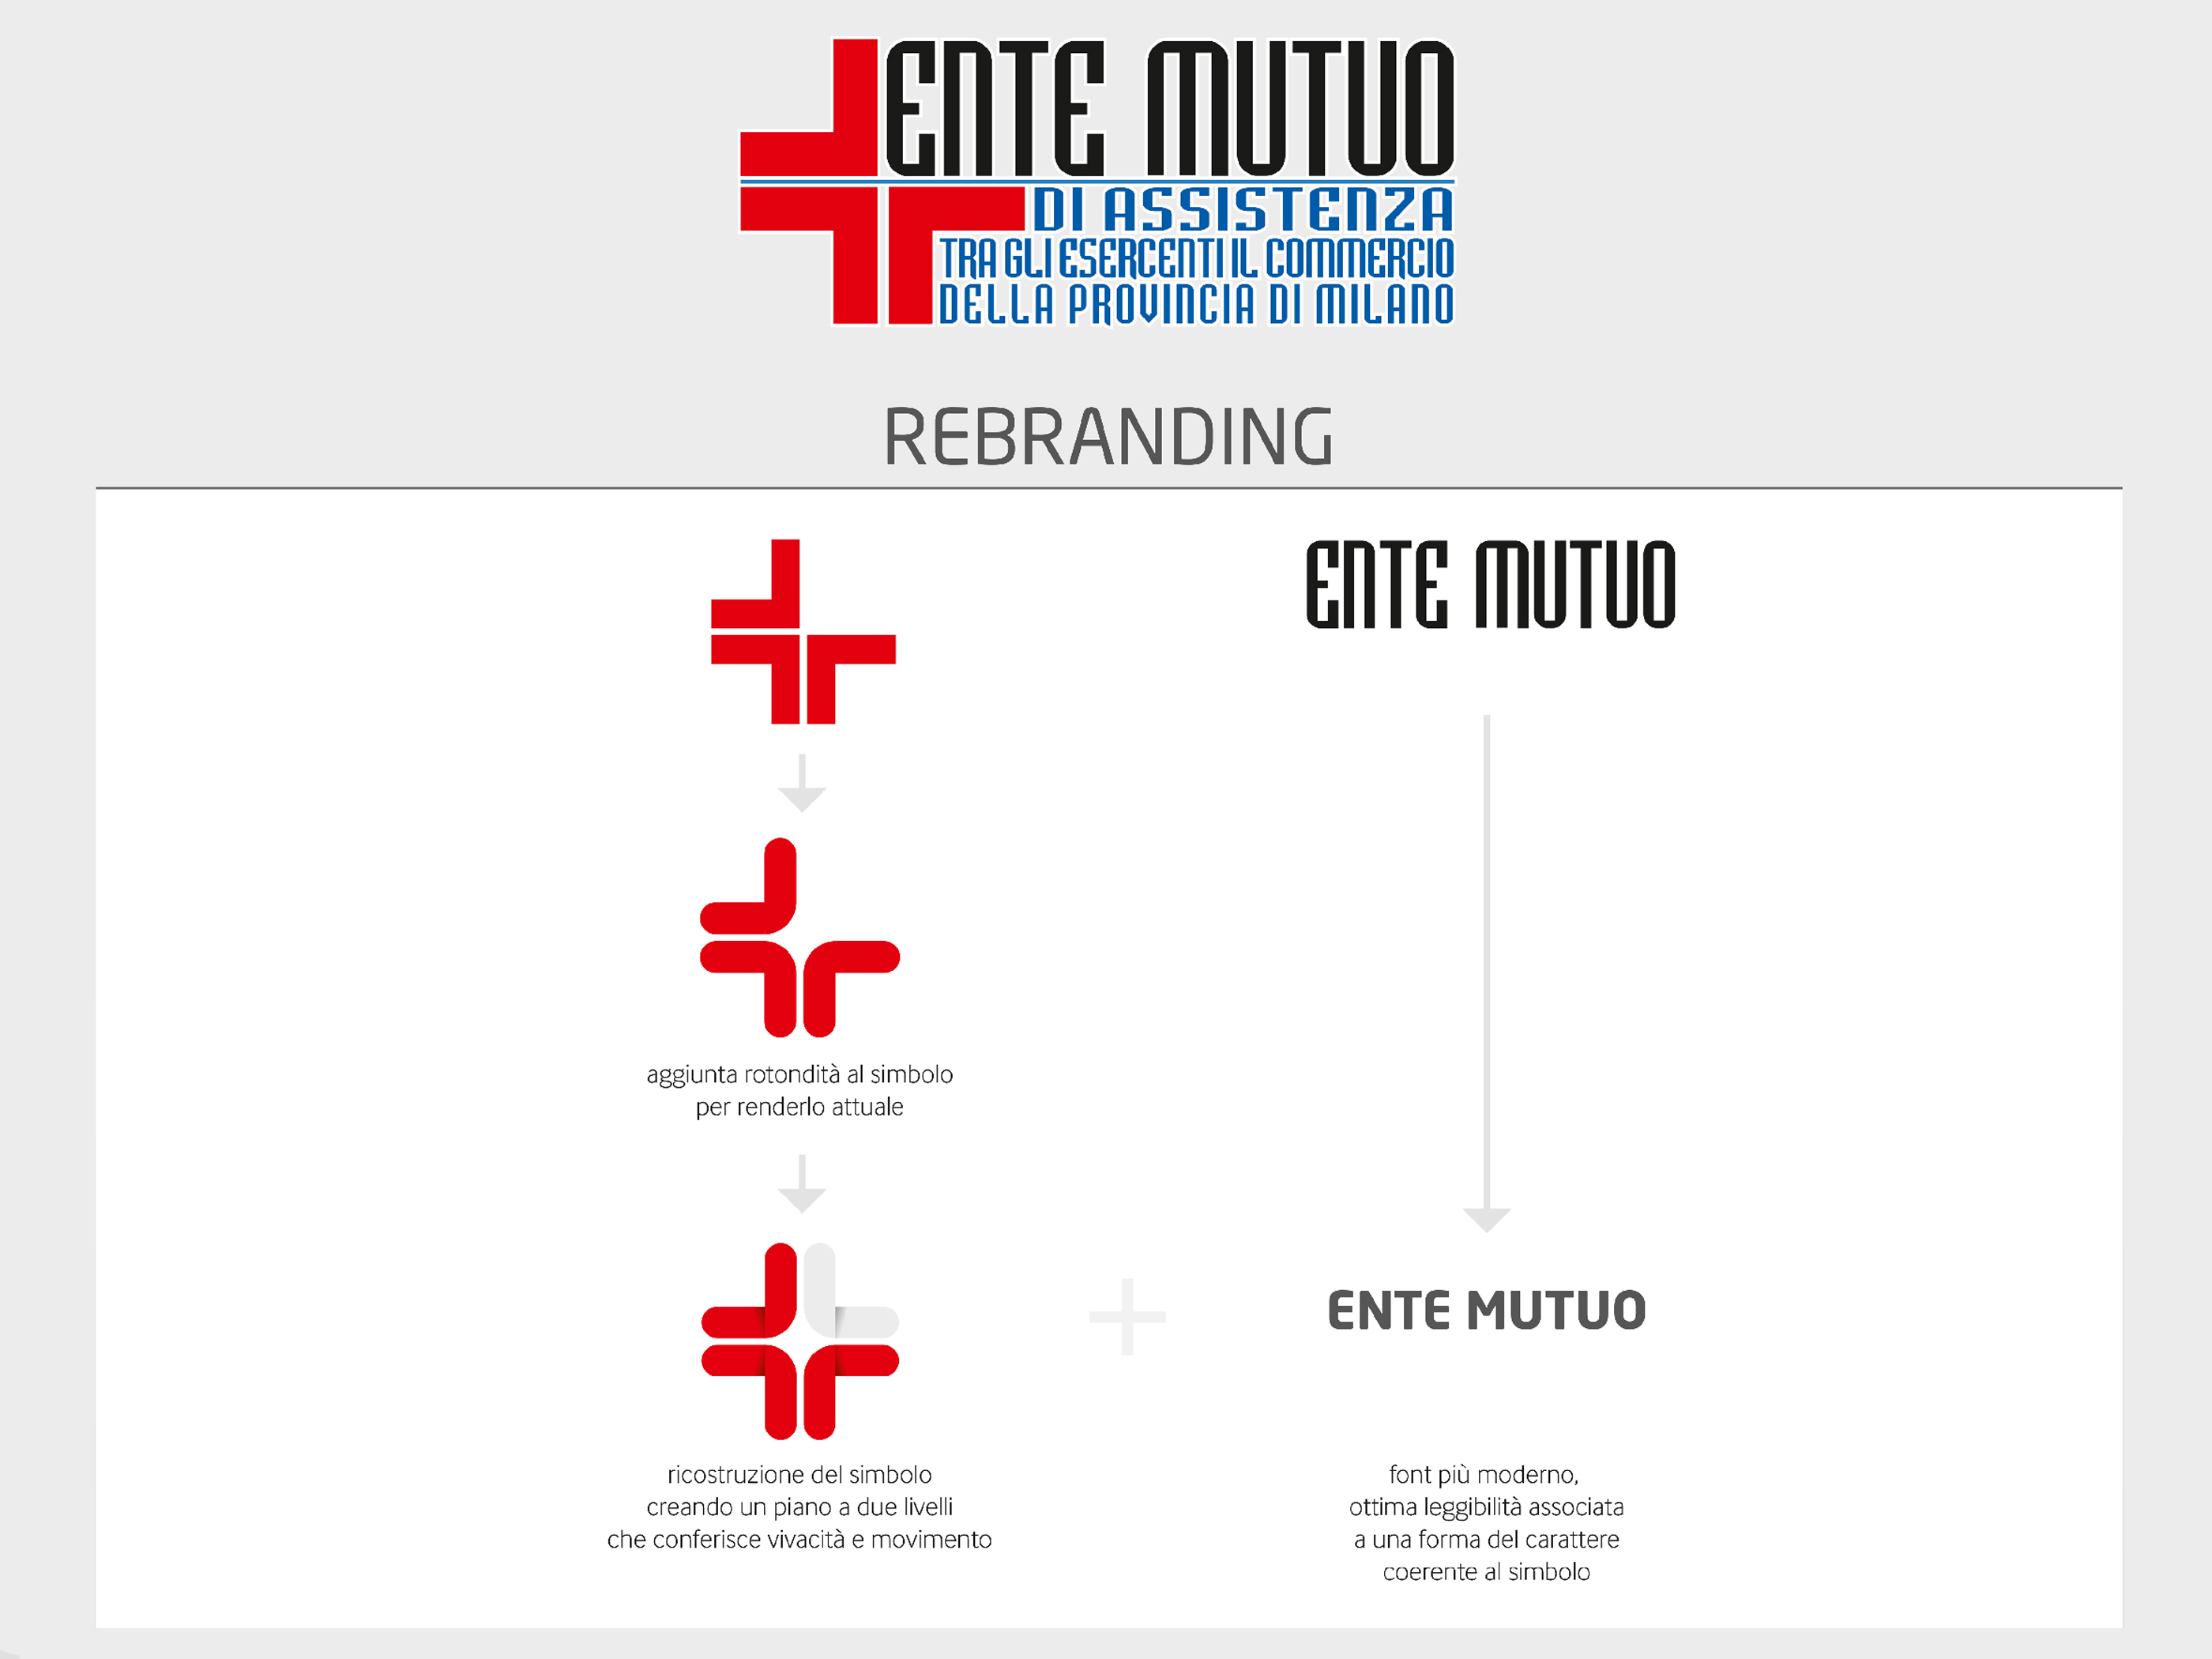 Rebranding Ente Mutuo Regionale